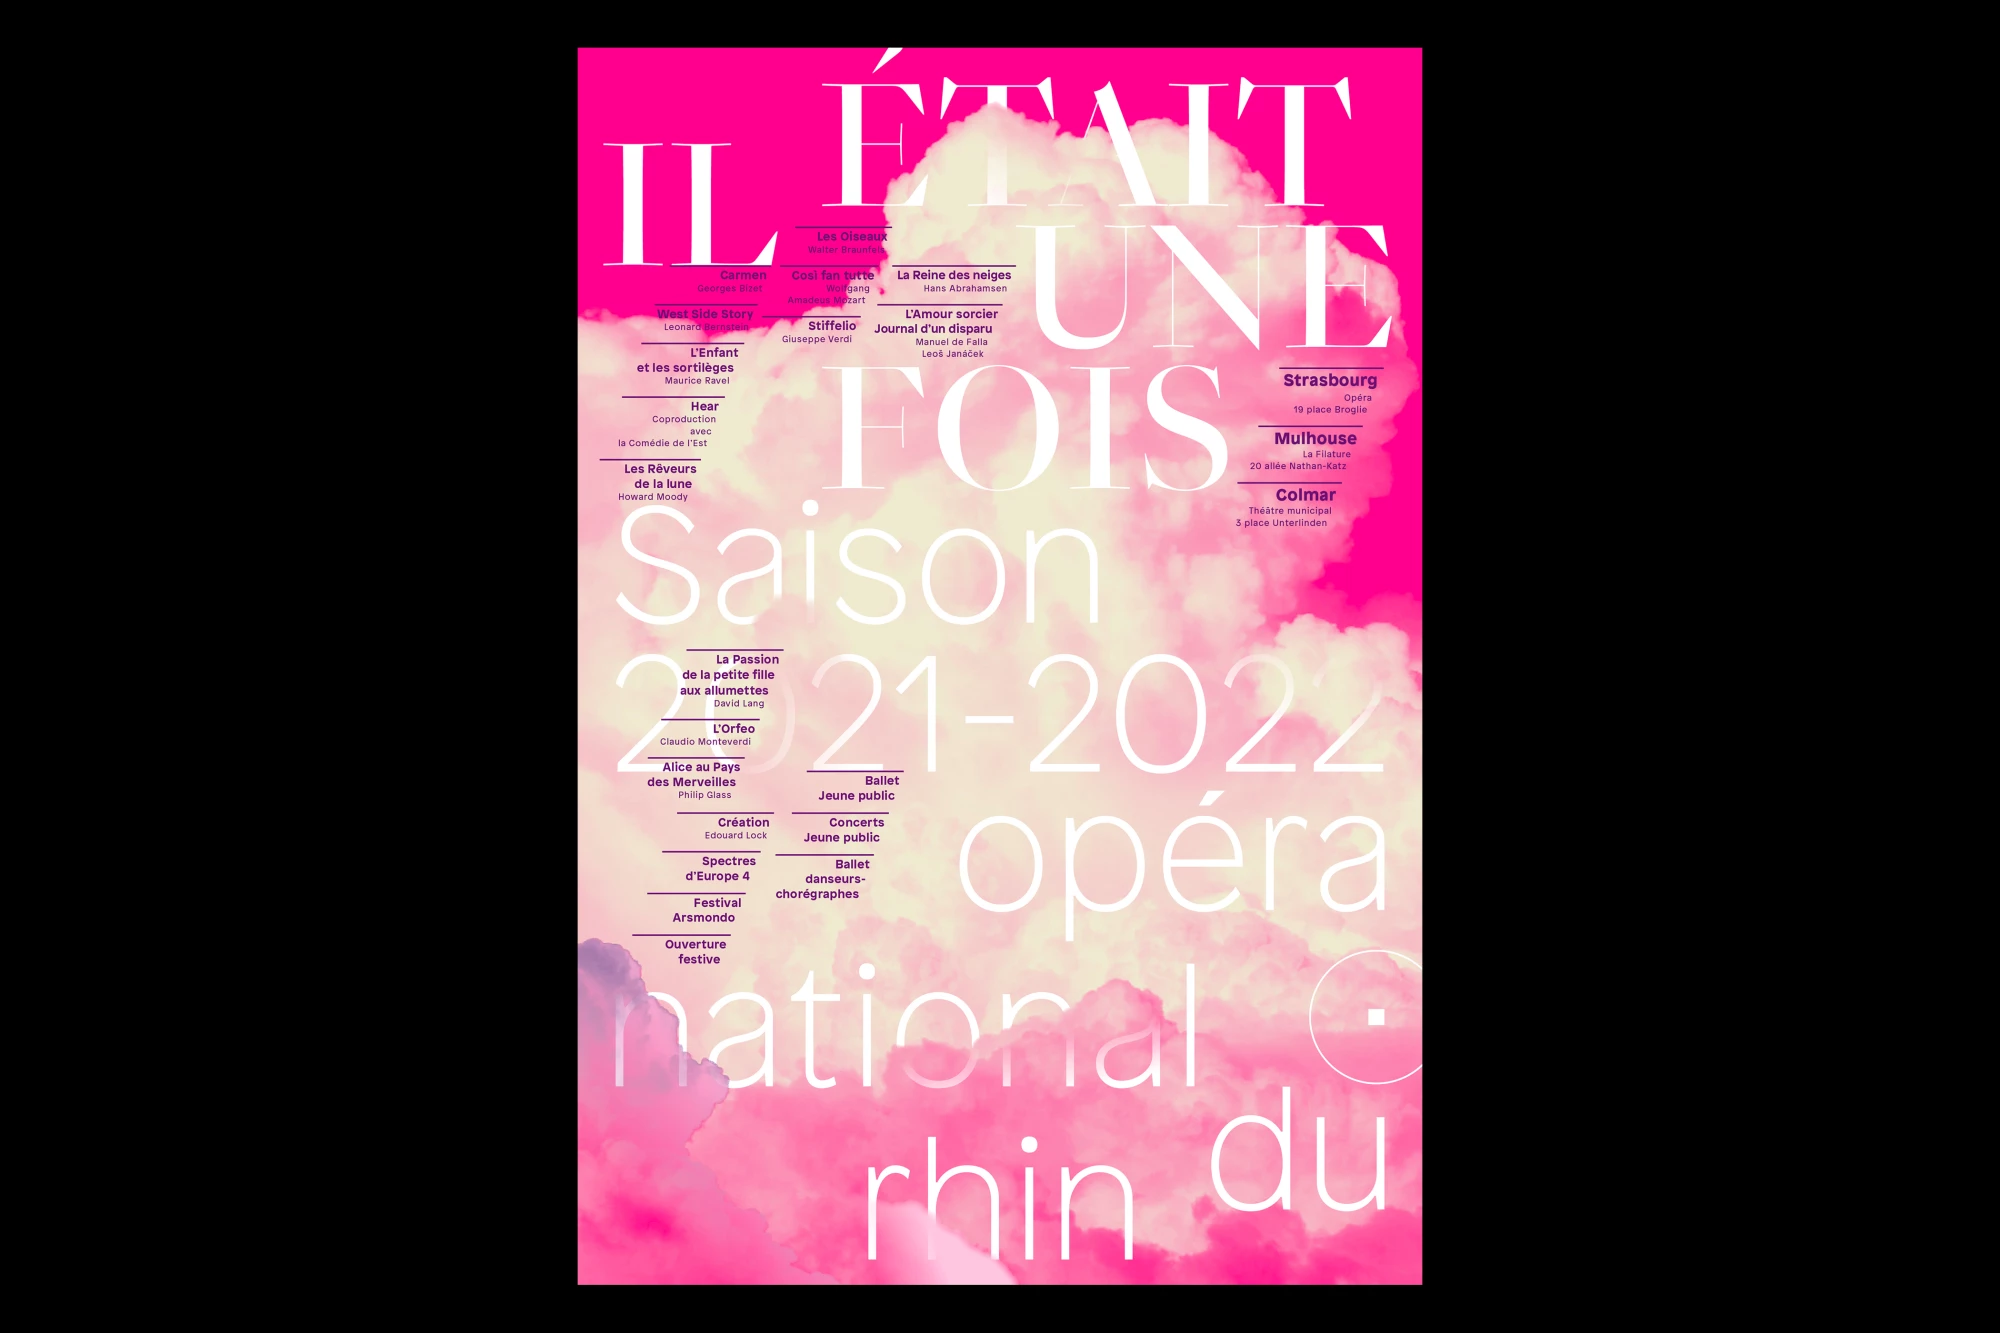 Léo Grunstein - Affiches et animations, Opéra national du Rhin, Identité, 2020